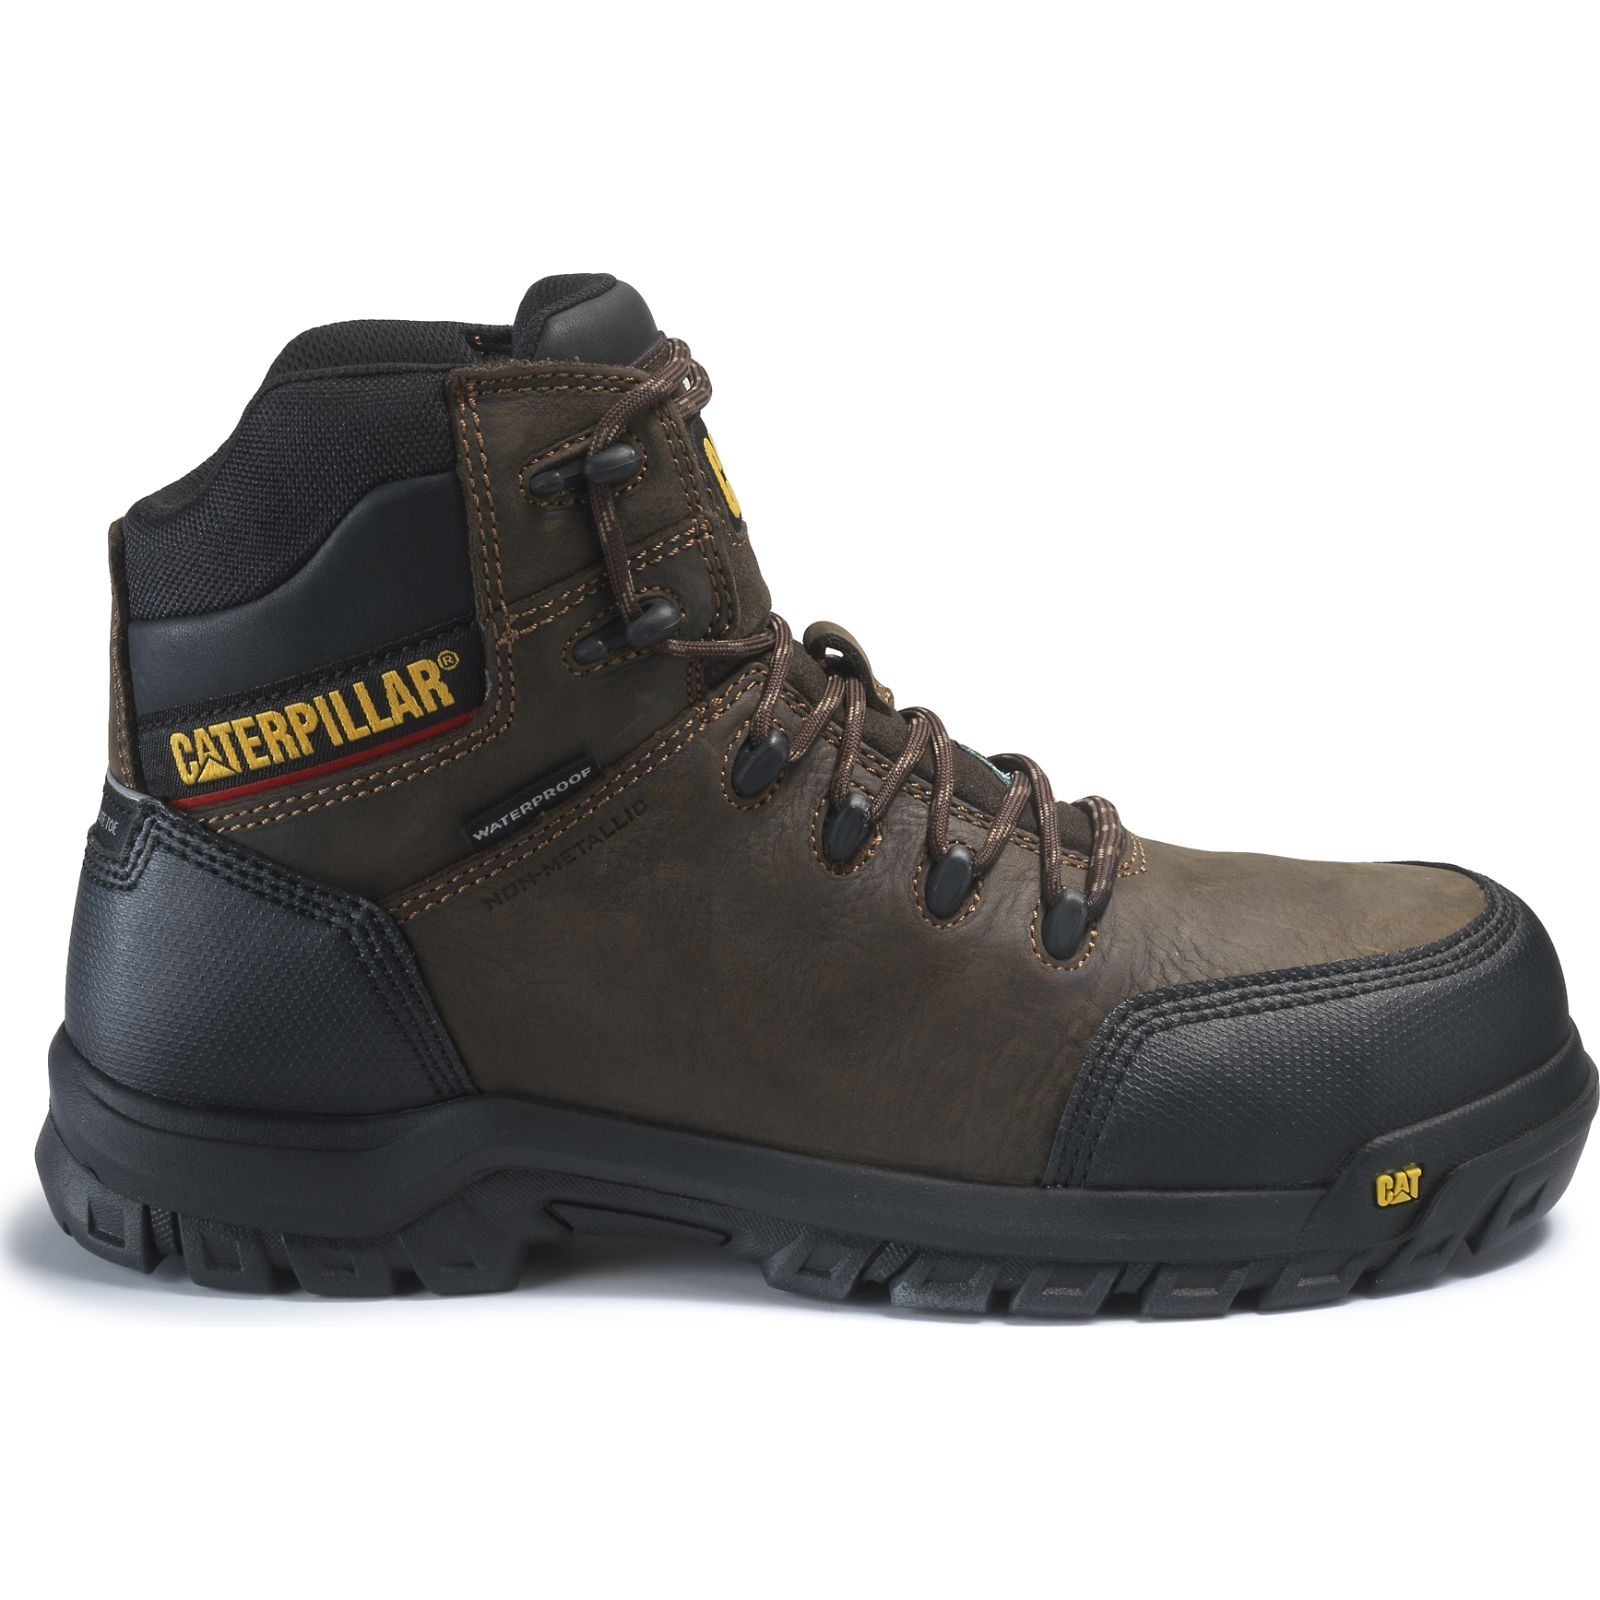 Caterpillar Resorption Ct Wp Csa Philippines - Mens Work Boots - Brown 89621KXDM